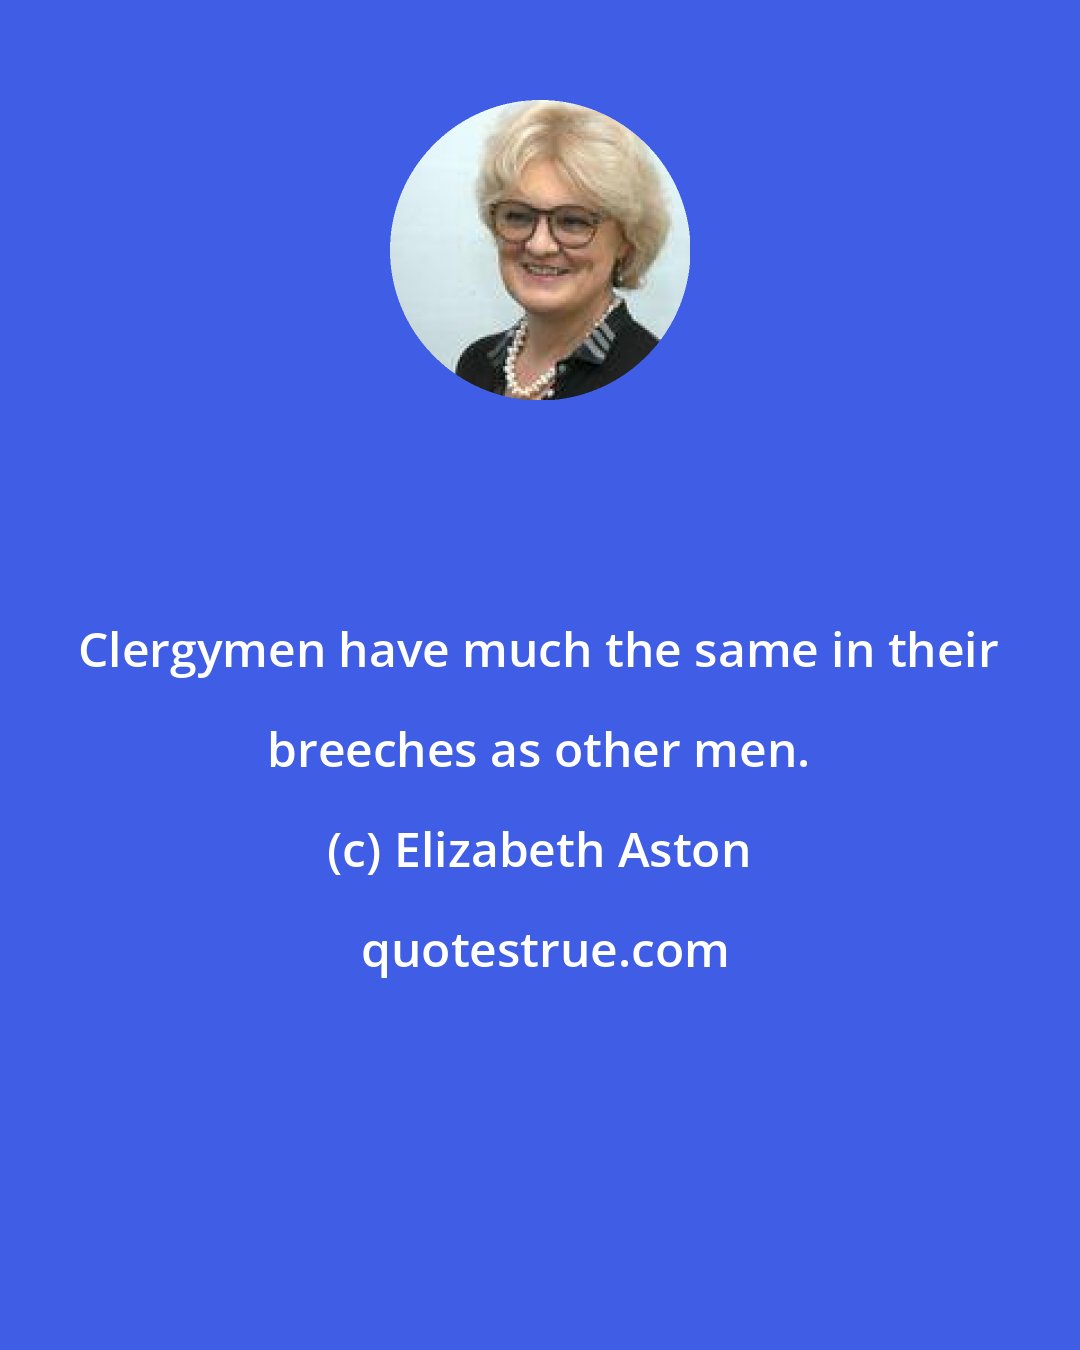 Elizabeth Aston: Clergymen have much the same in their breeches as other men.